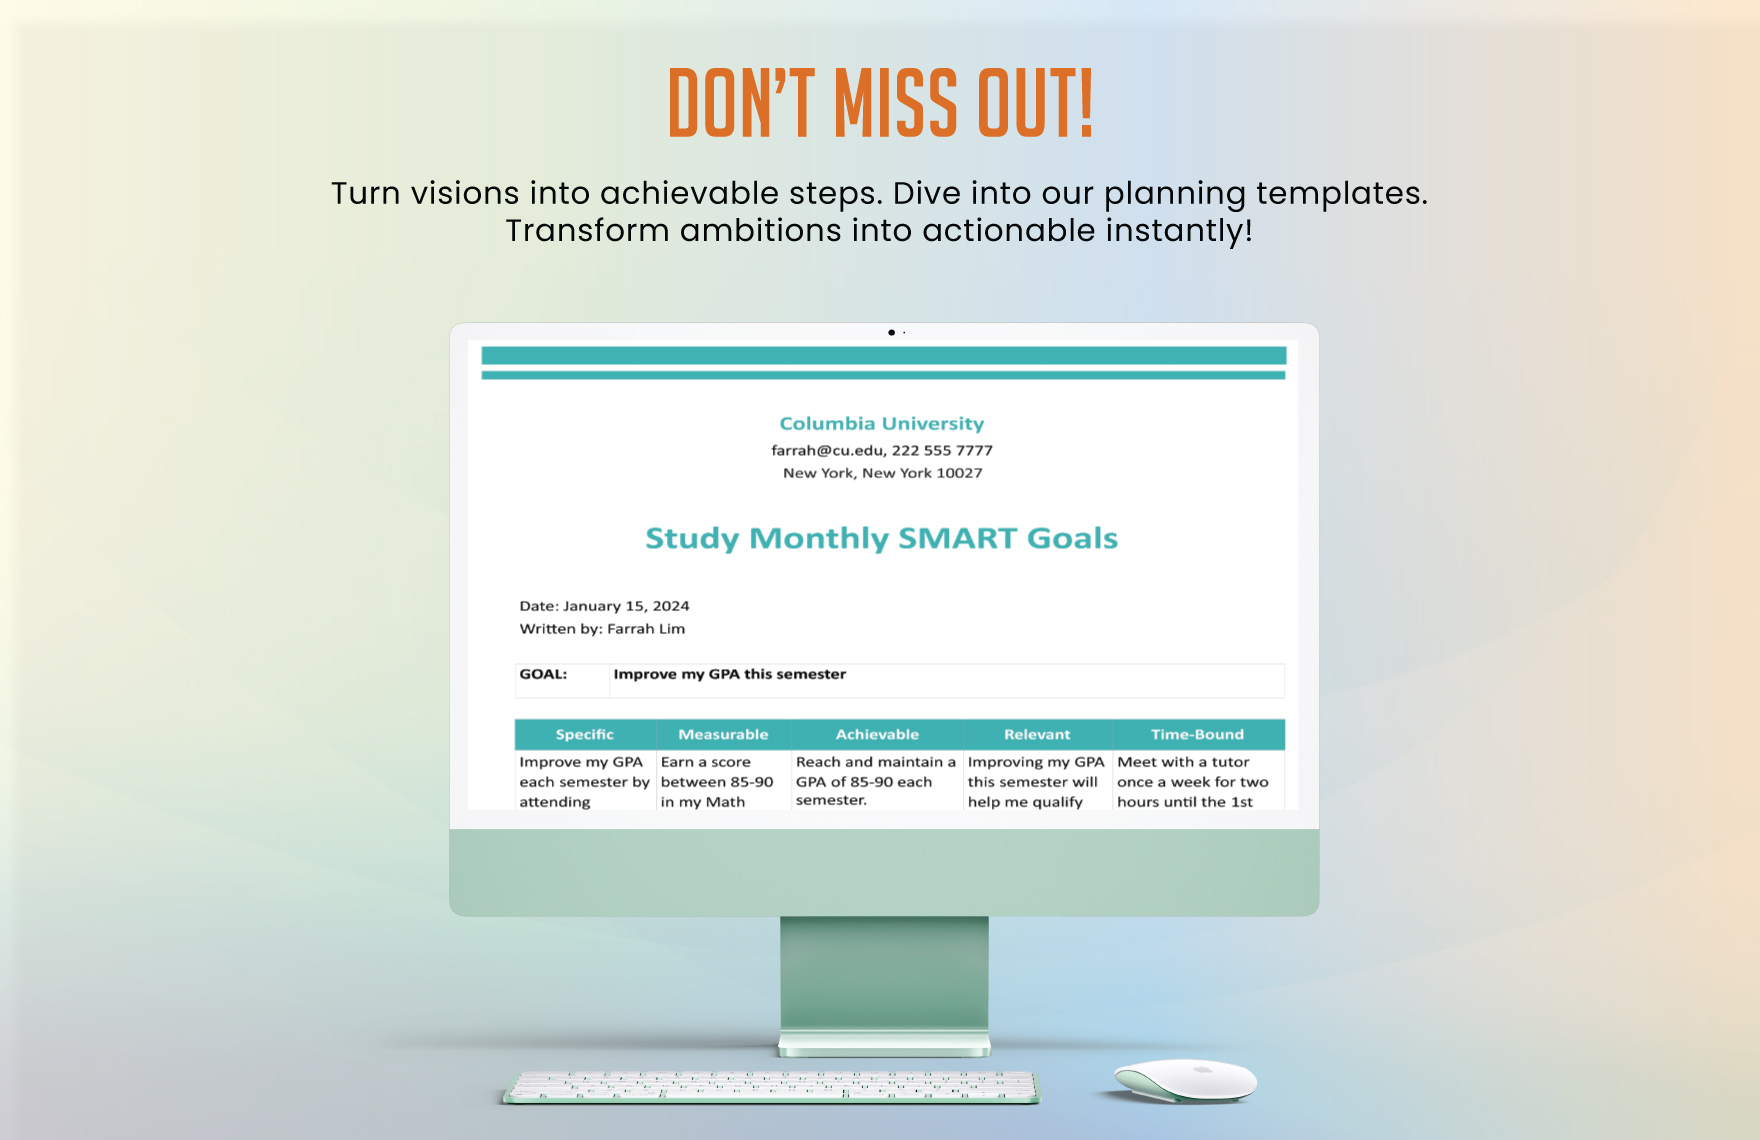 Study Monthly Smart Goals Template